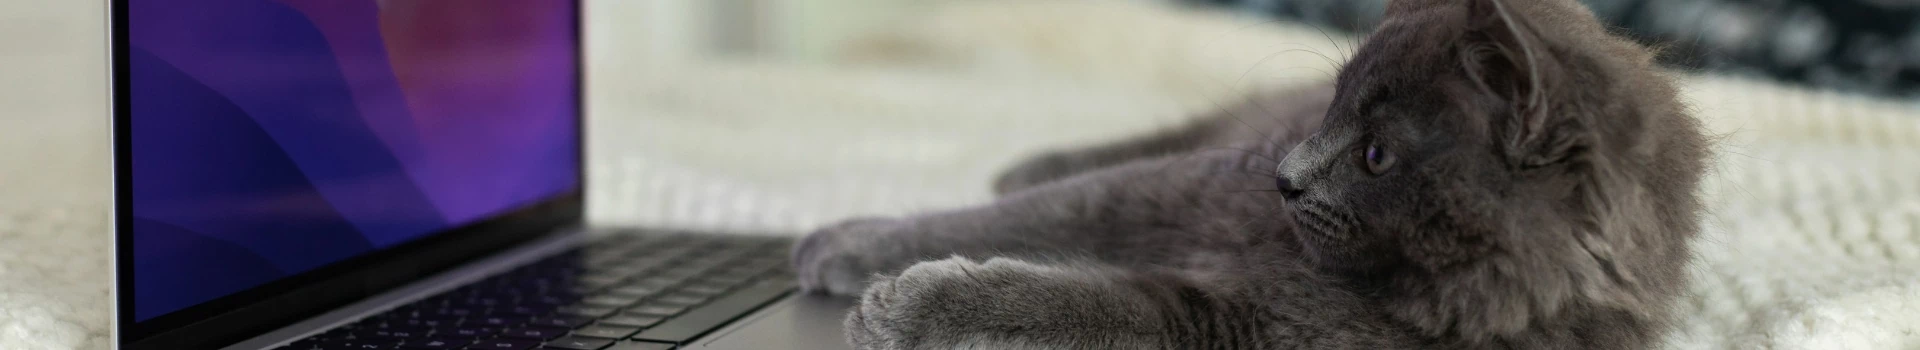 Kotek przy laptopie